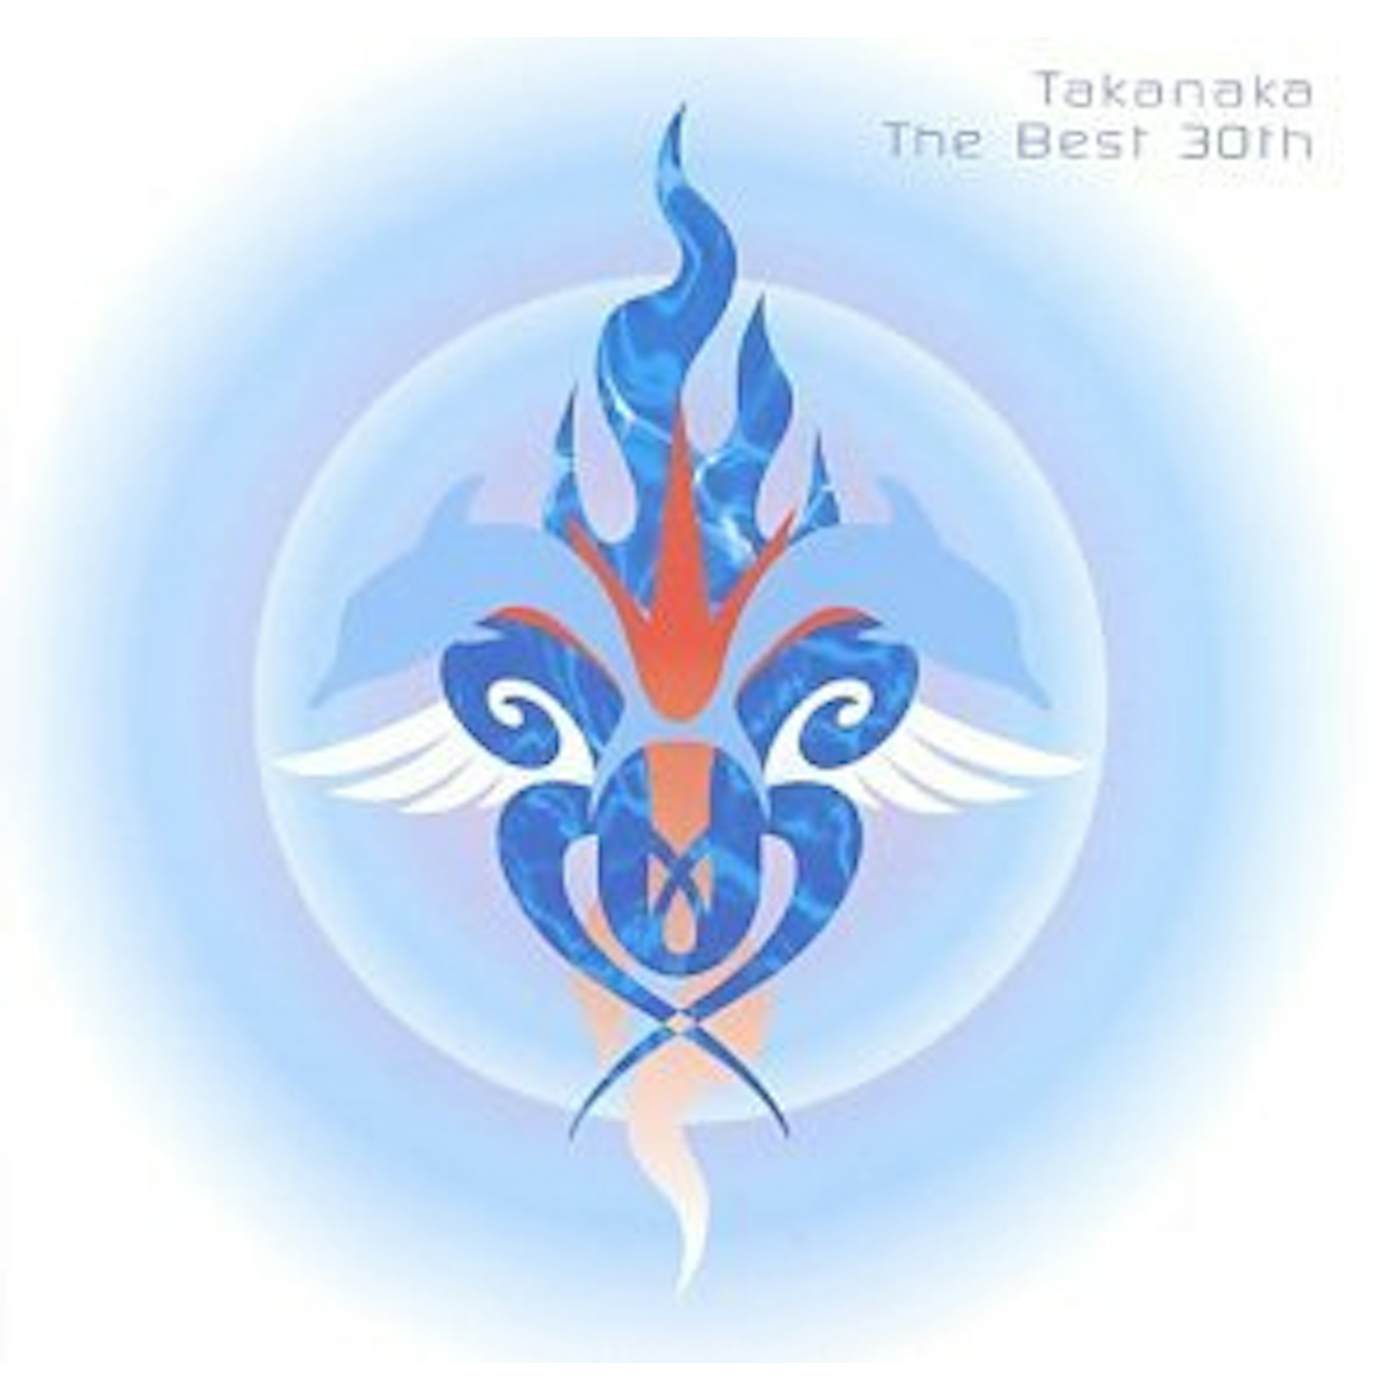 Masayoshi Takanaka BEST 30TH CD